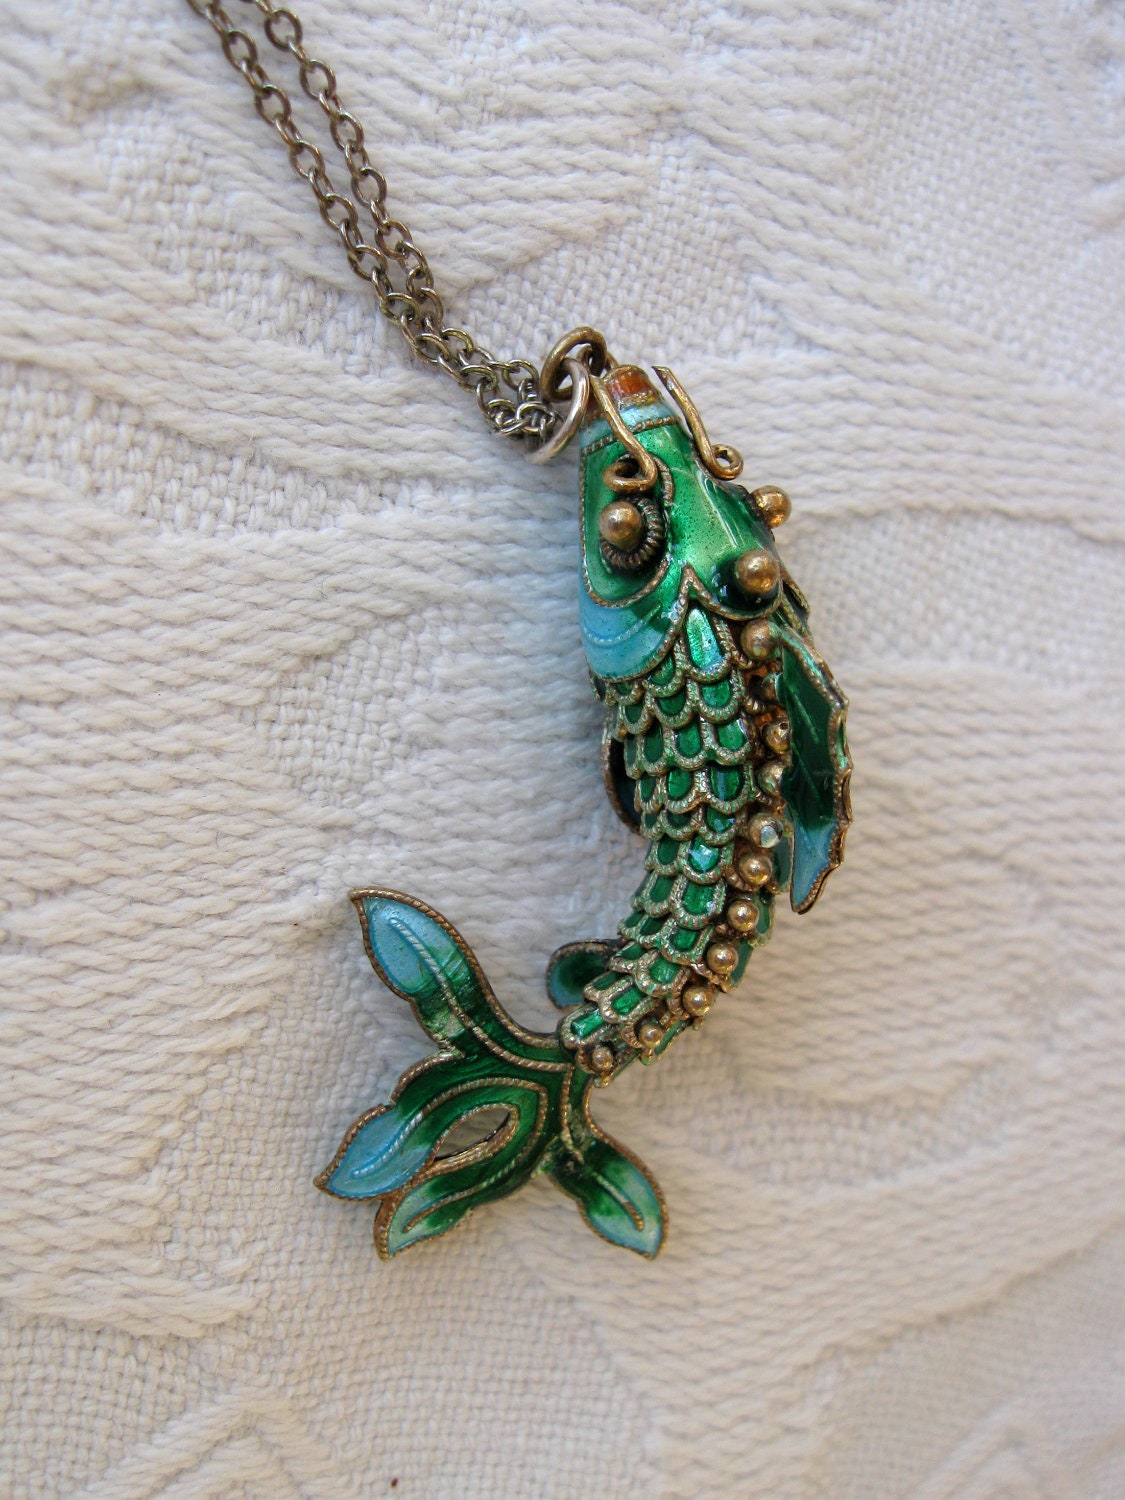 Vintage Enamel Fish Pendant Necklace Beautiful Color and